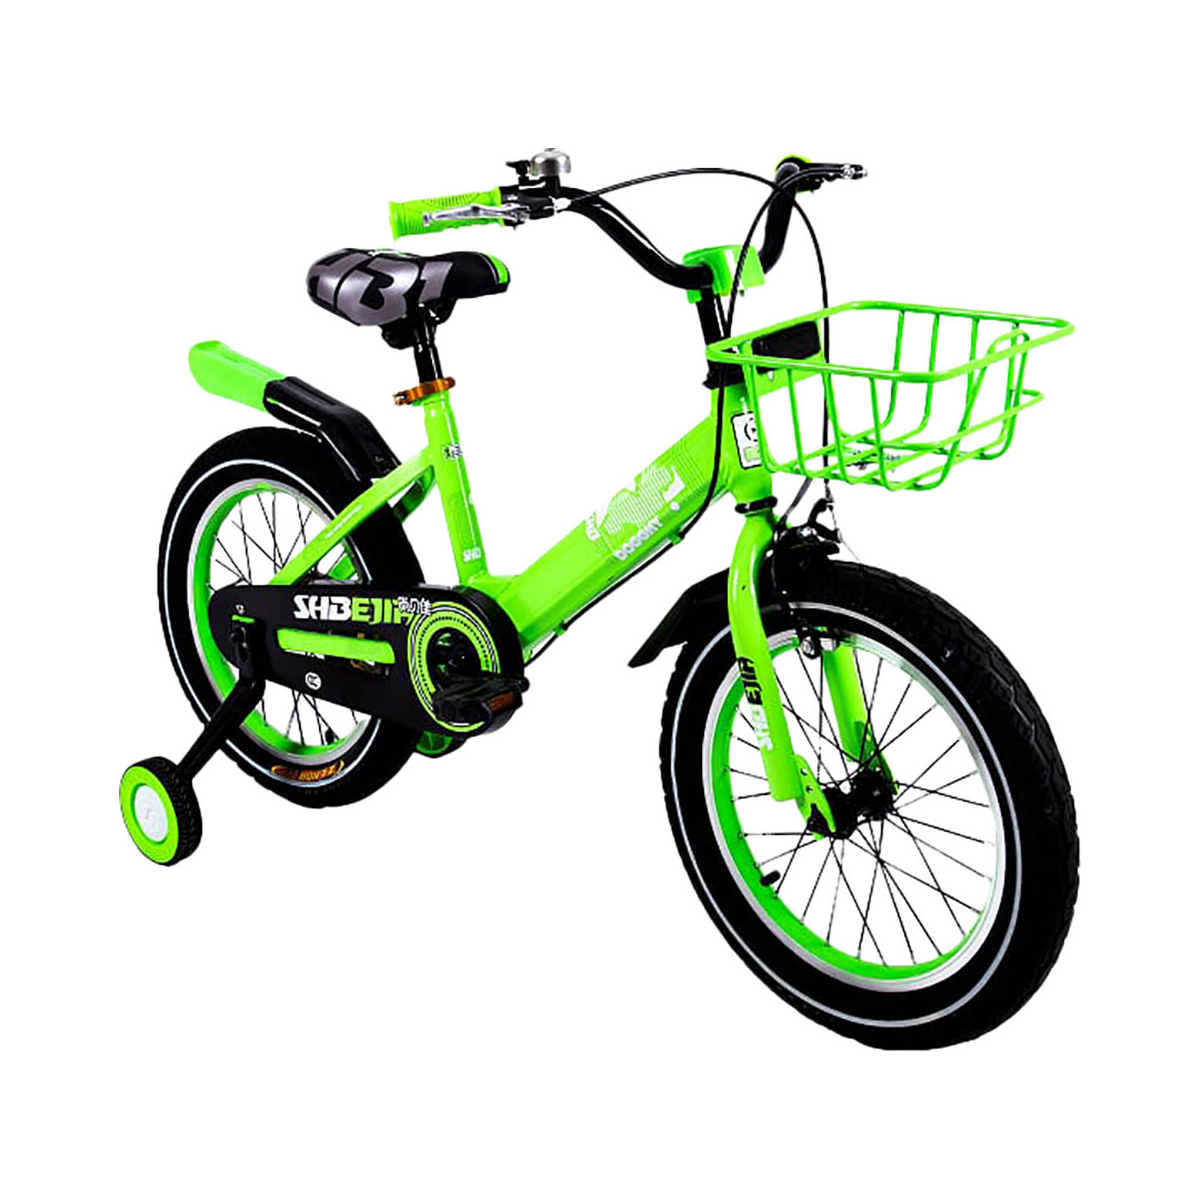 DESERT STAR Shbjia Kids Bicycle , Green 16inch